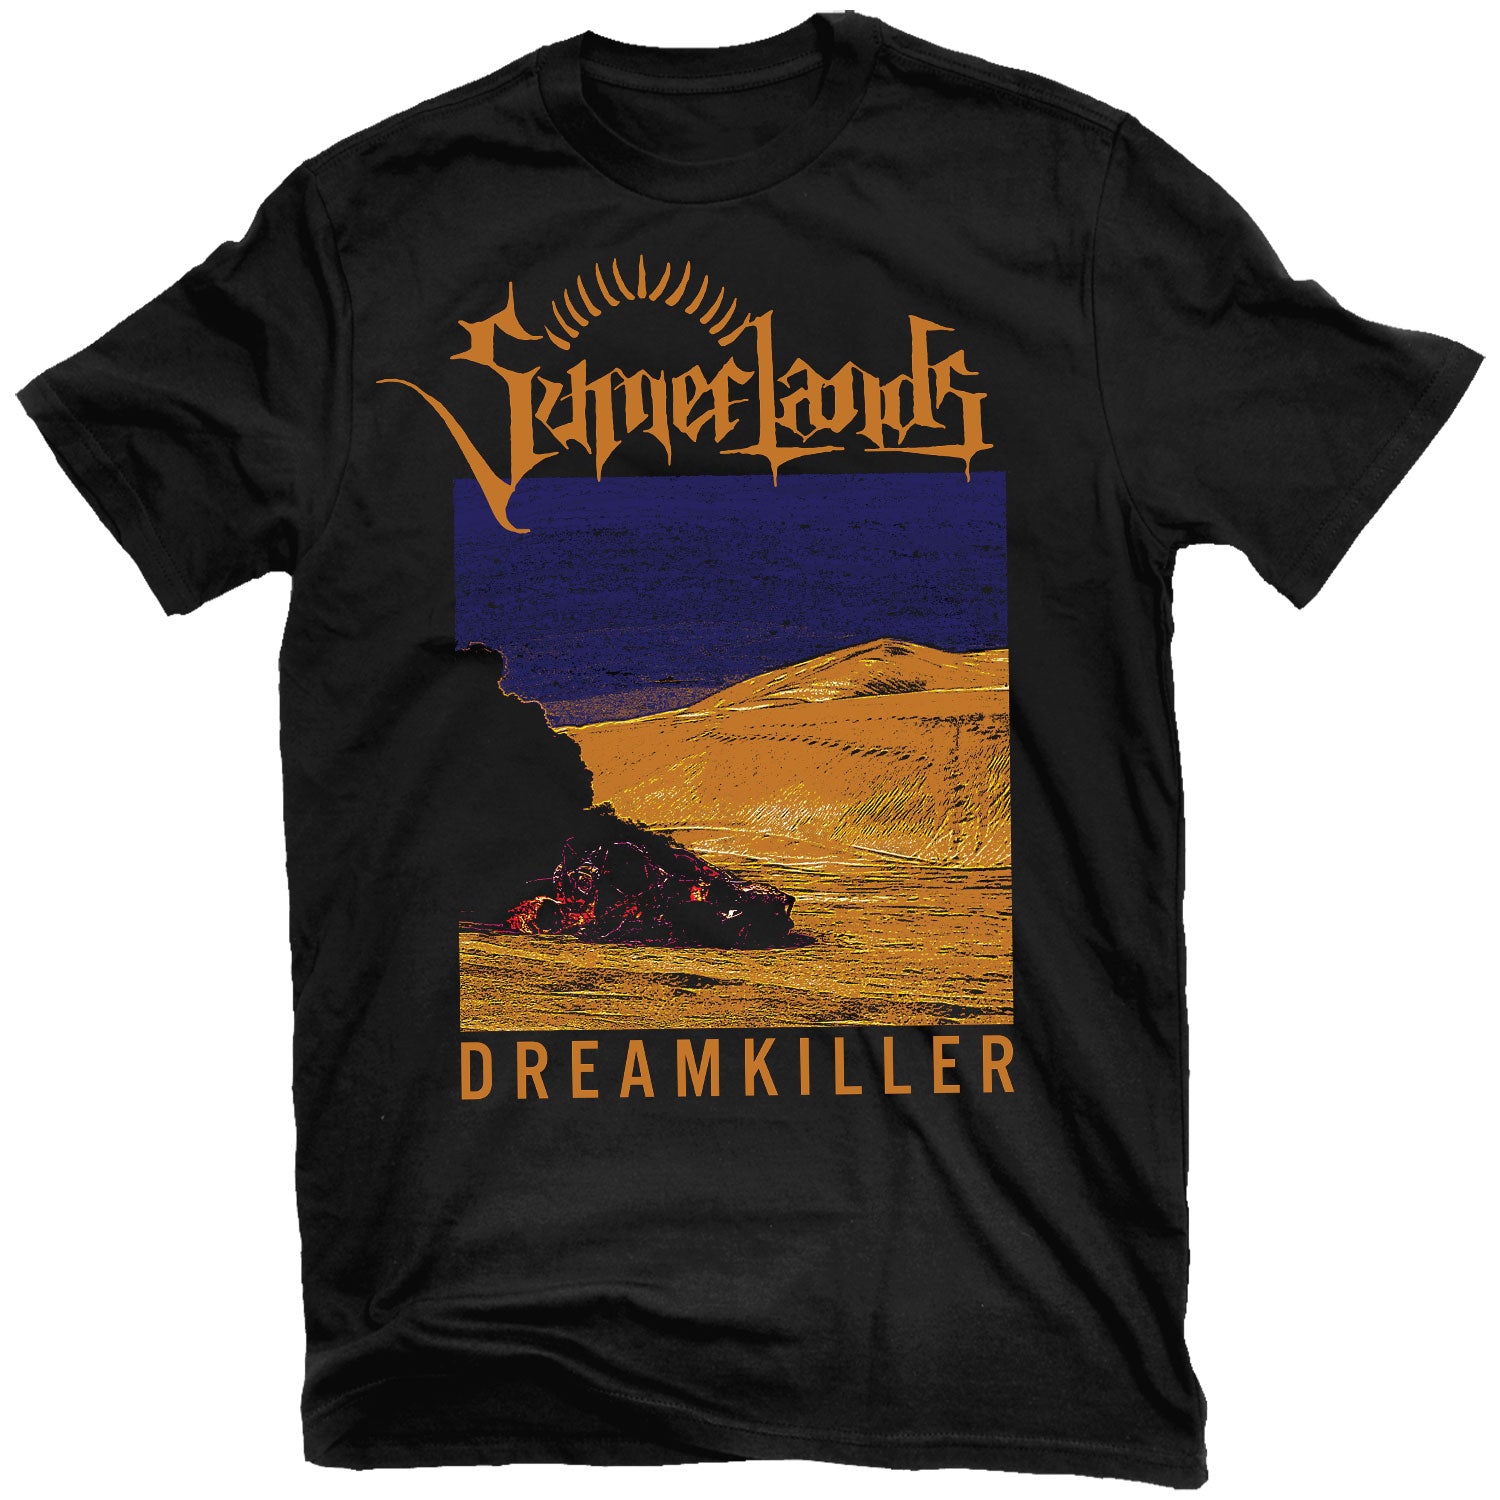 Sumerlands "Dreamkiller" T-Shirt